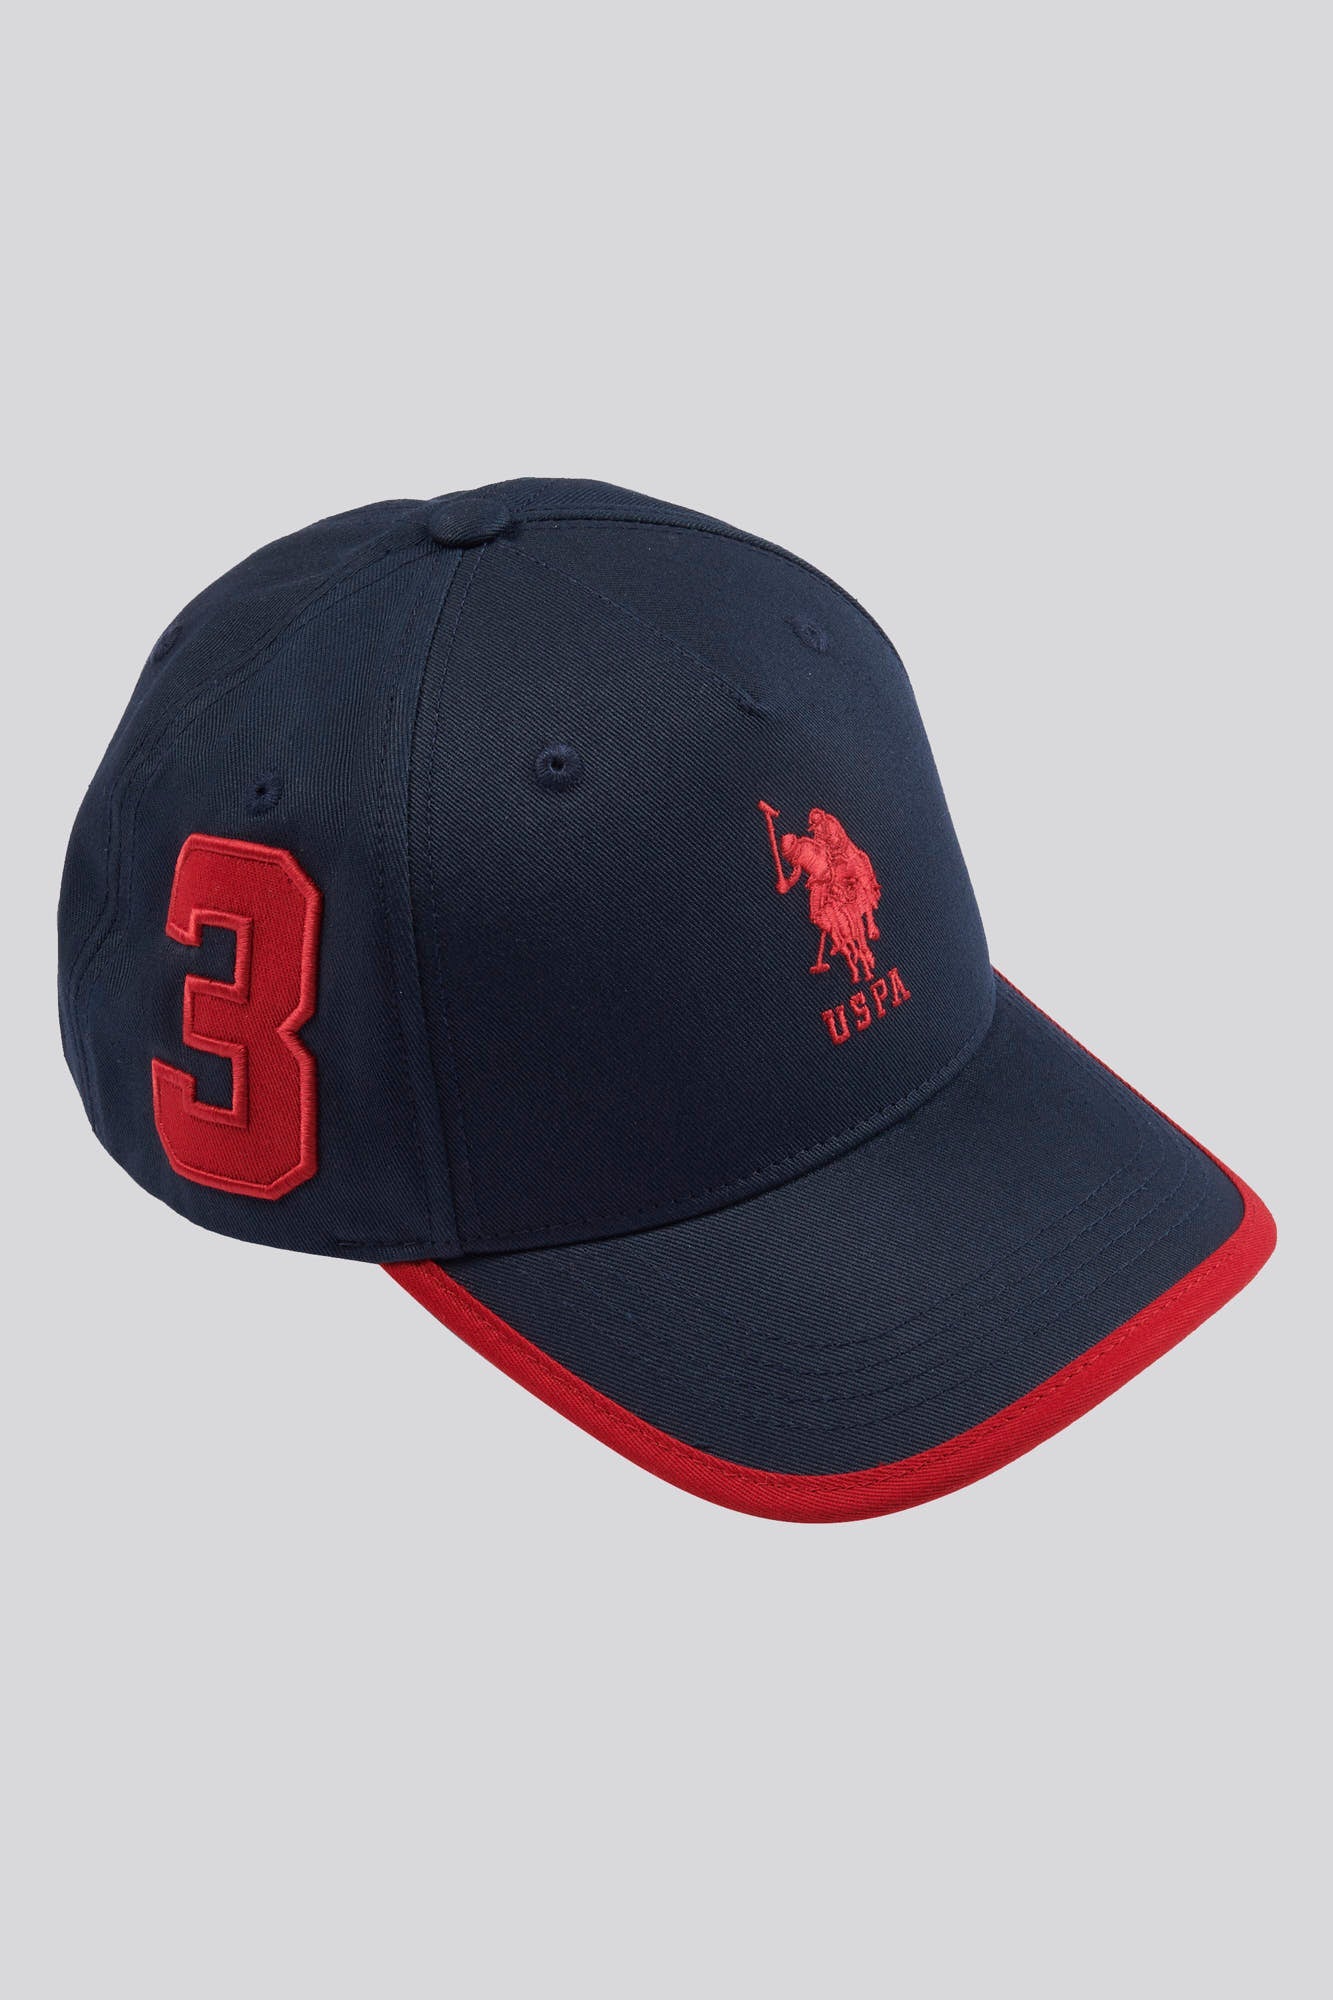 U.S. Polo Assn. Mens Player 3 Baseball Cap in Dark Sapphire Navy / Haute Red DHM